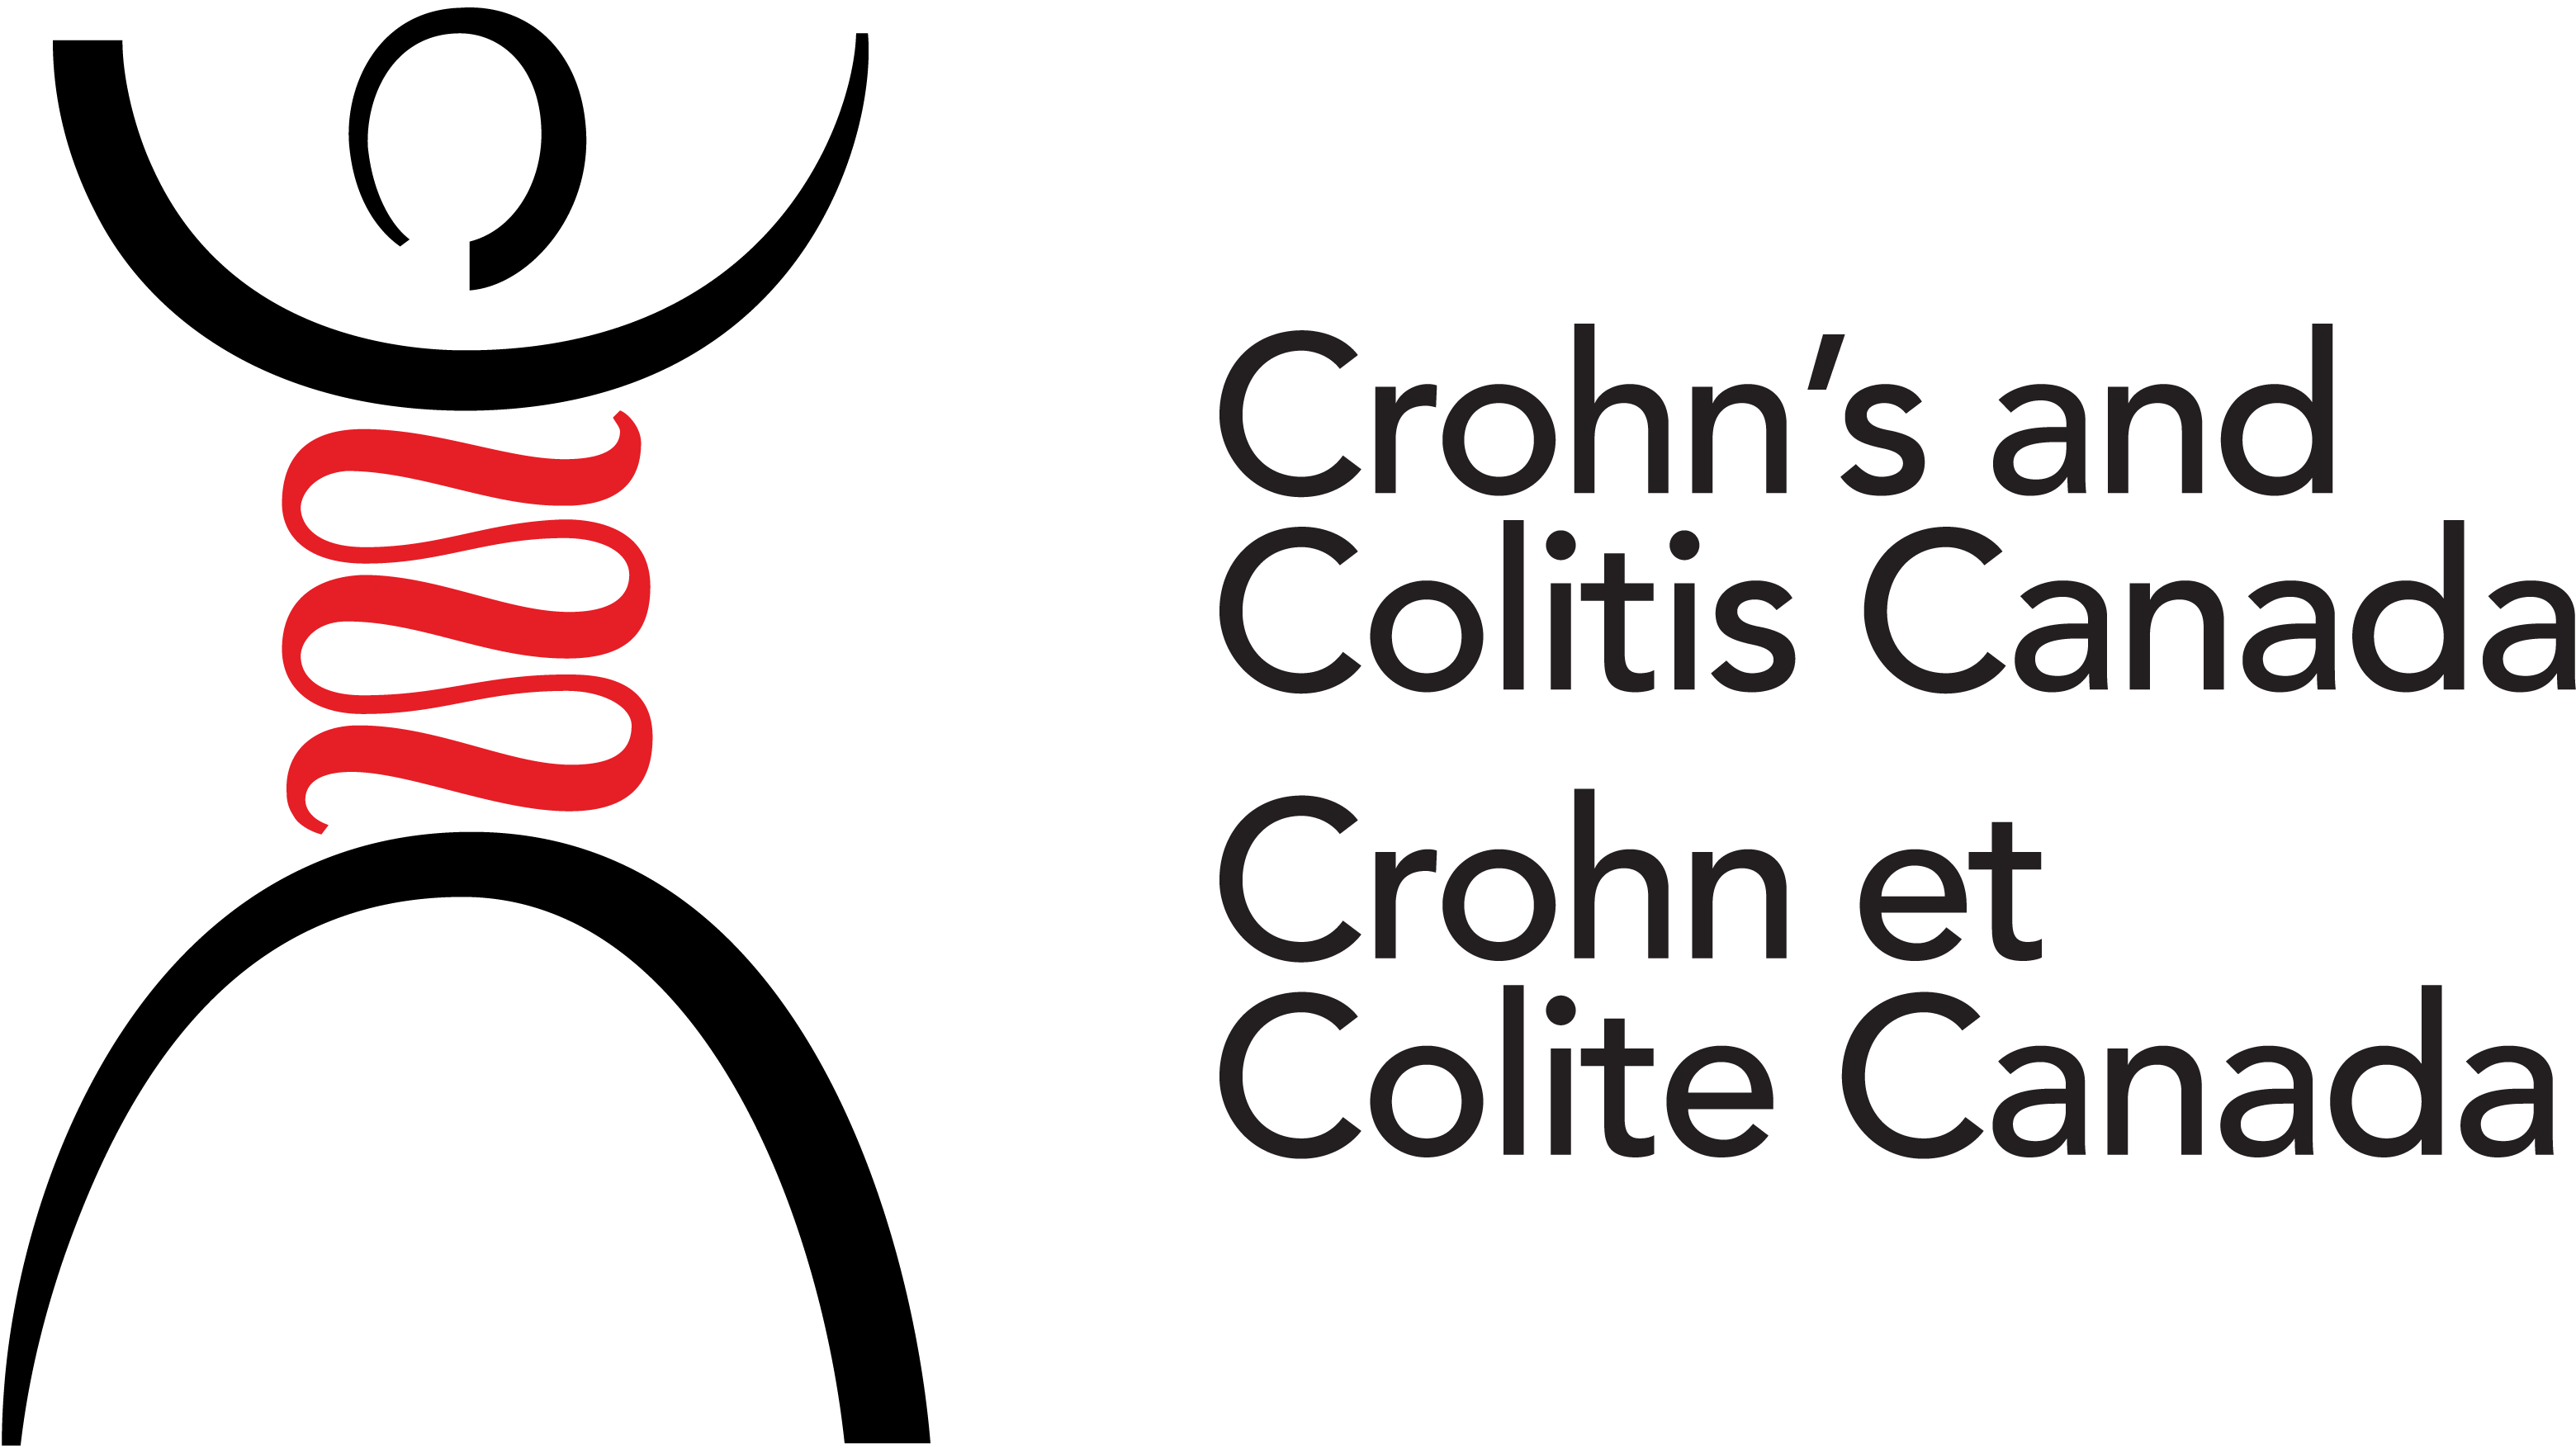 Crohn's and Colitis Canada Logo